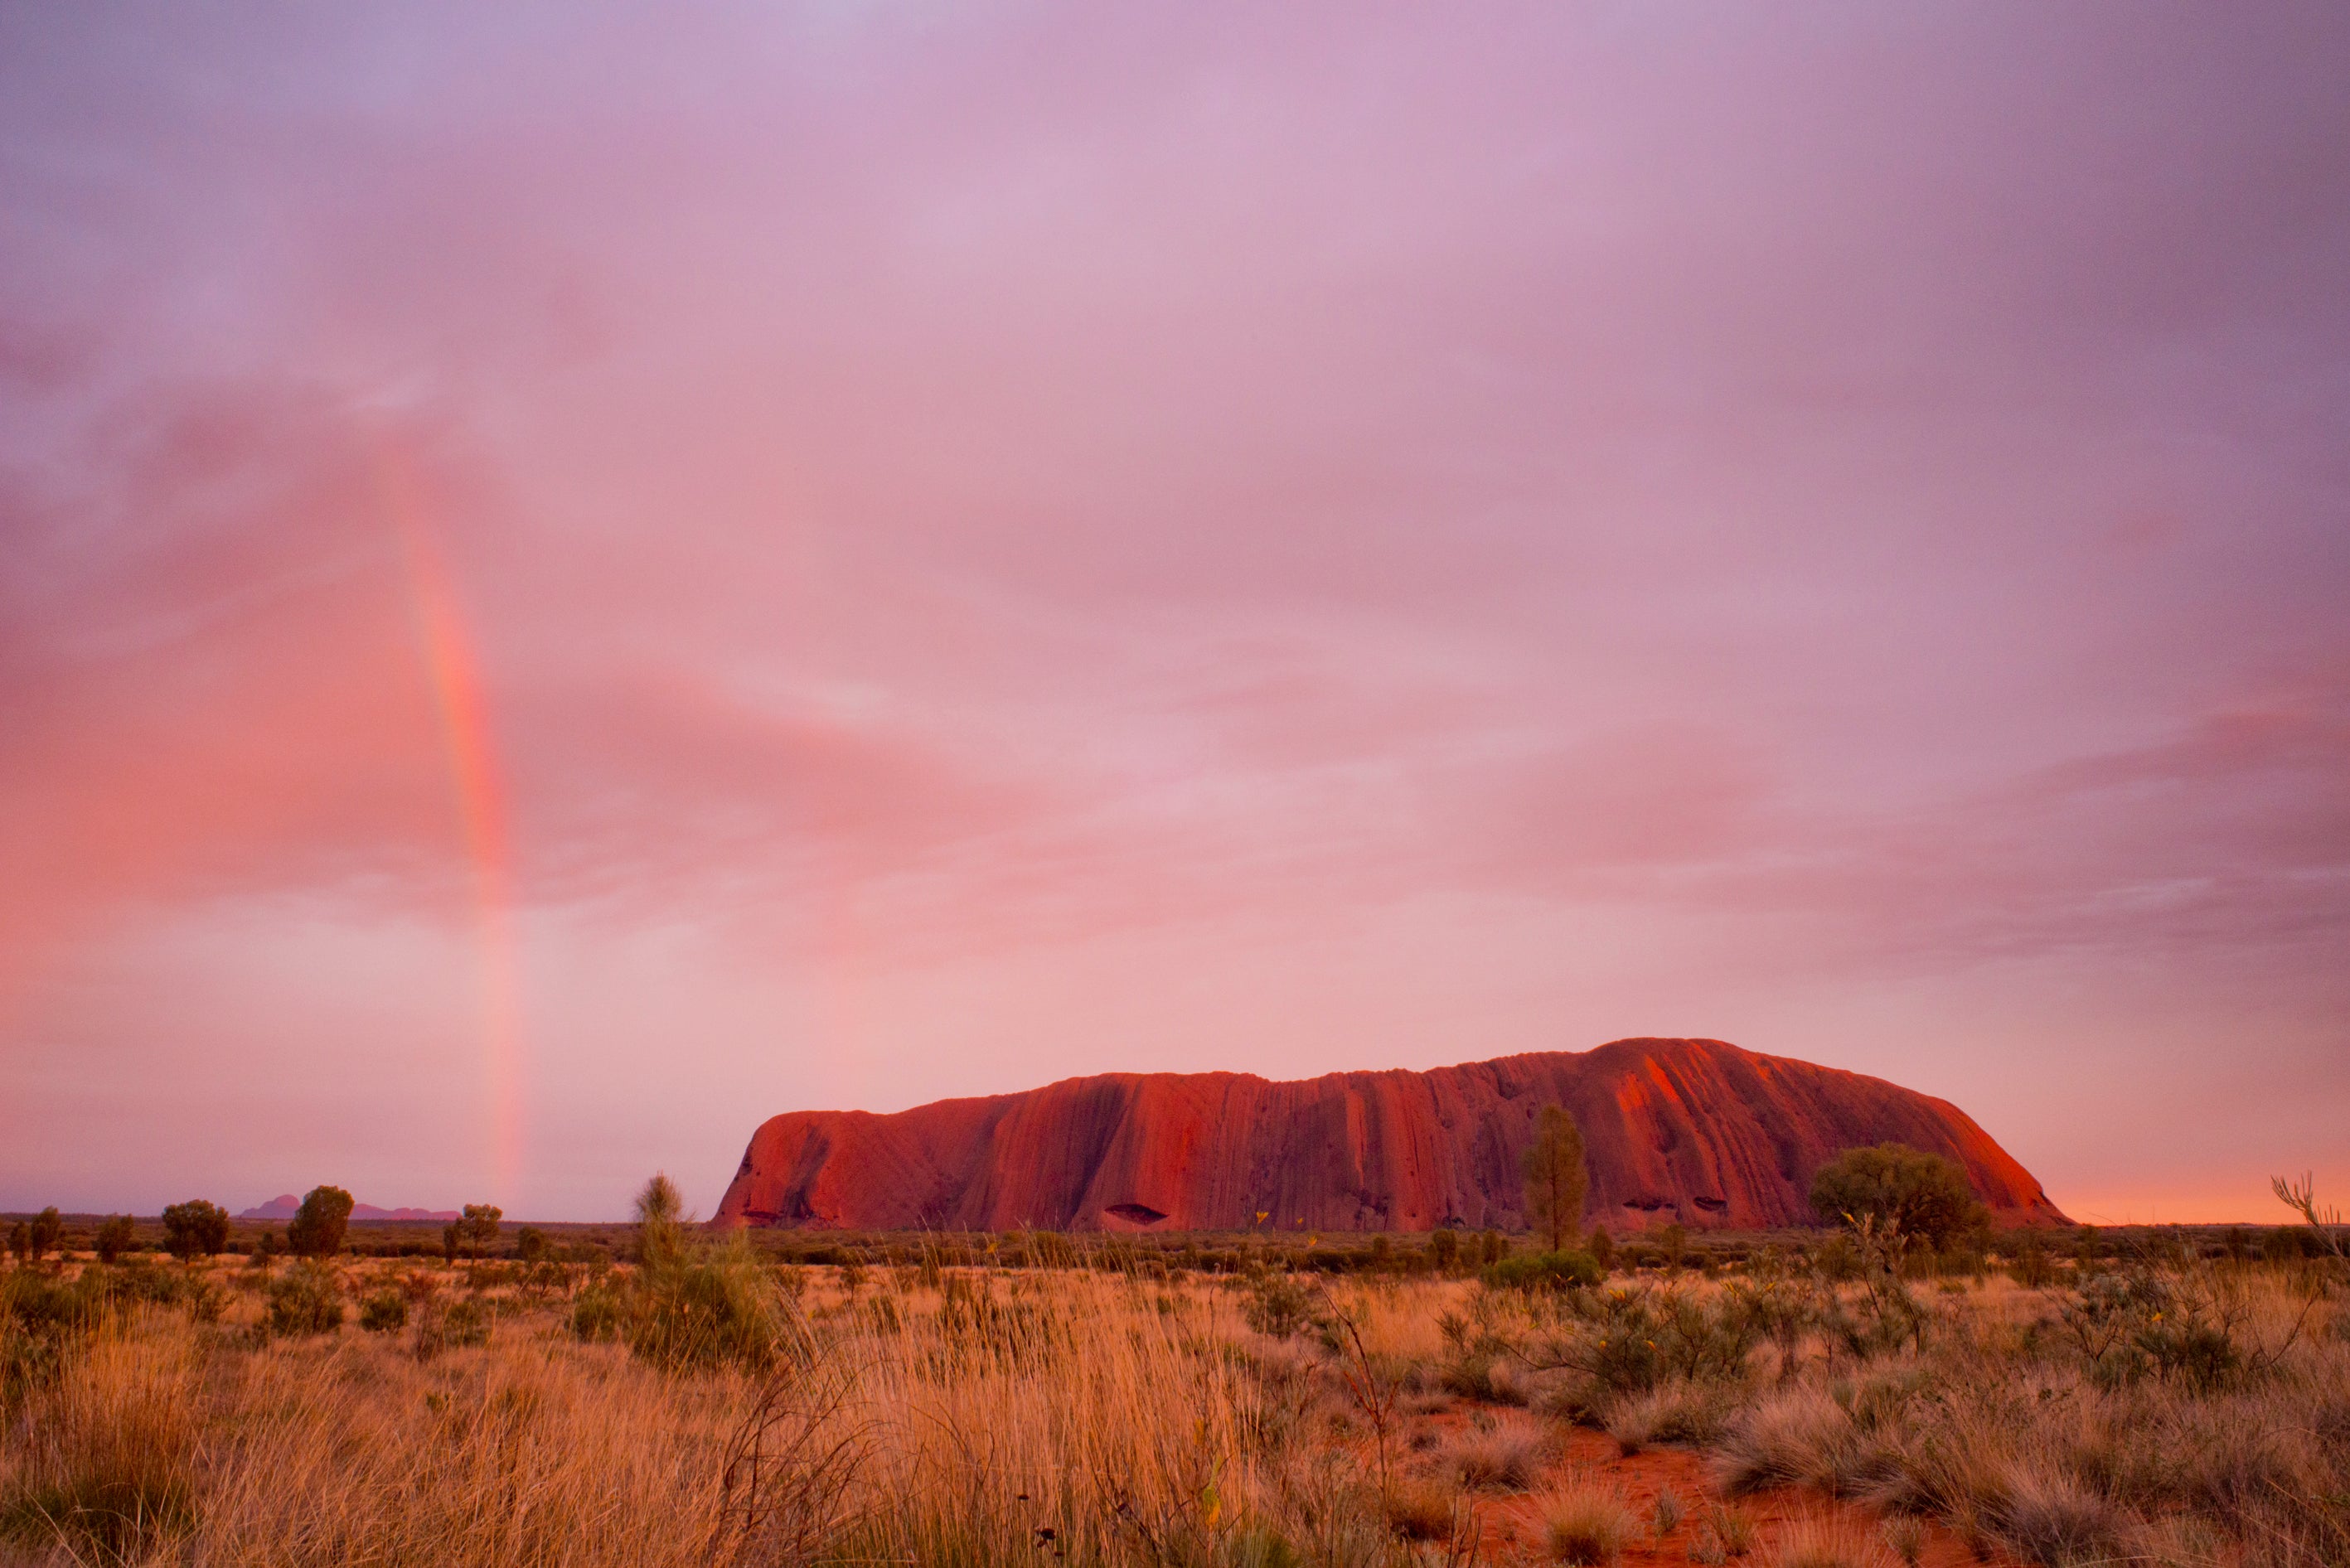 Uluru is known throughout the world as an Australian landmark